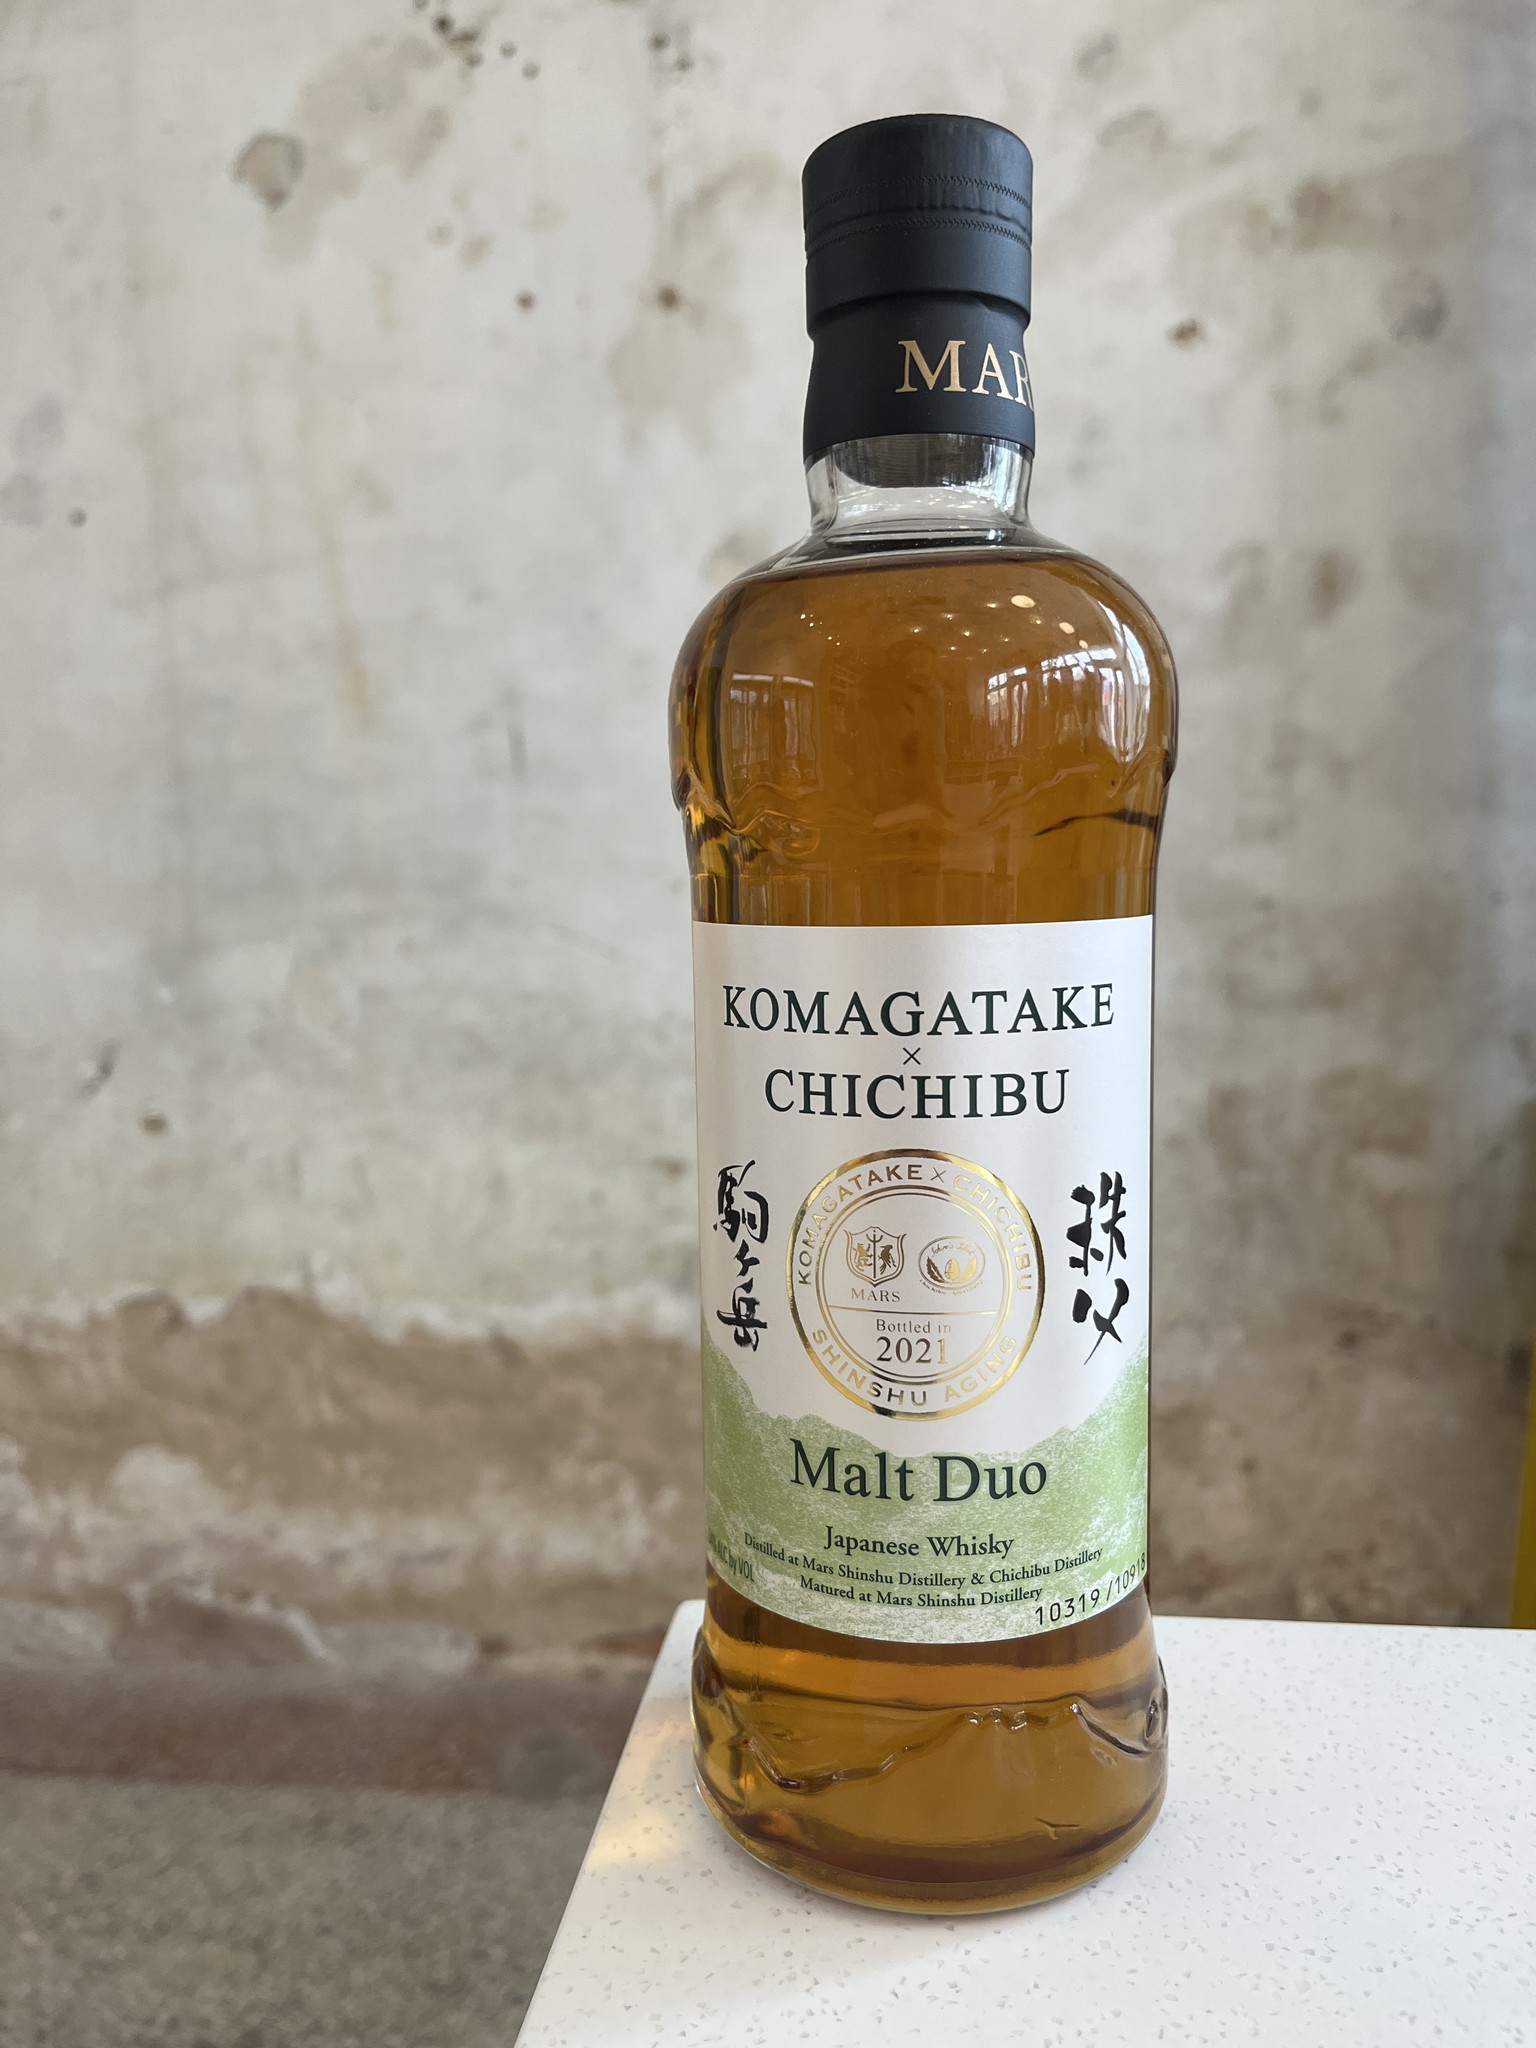 Mars Shinshu Mars Whisky Duo Komagatake Chichibu Collab Double Malt Whisky